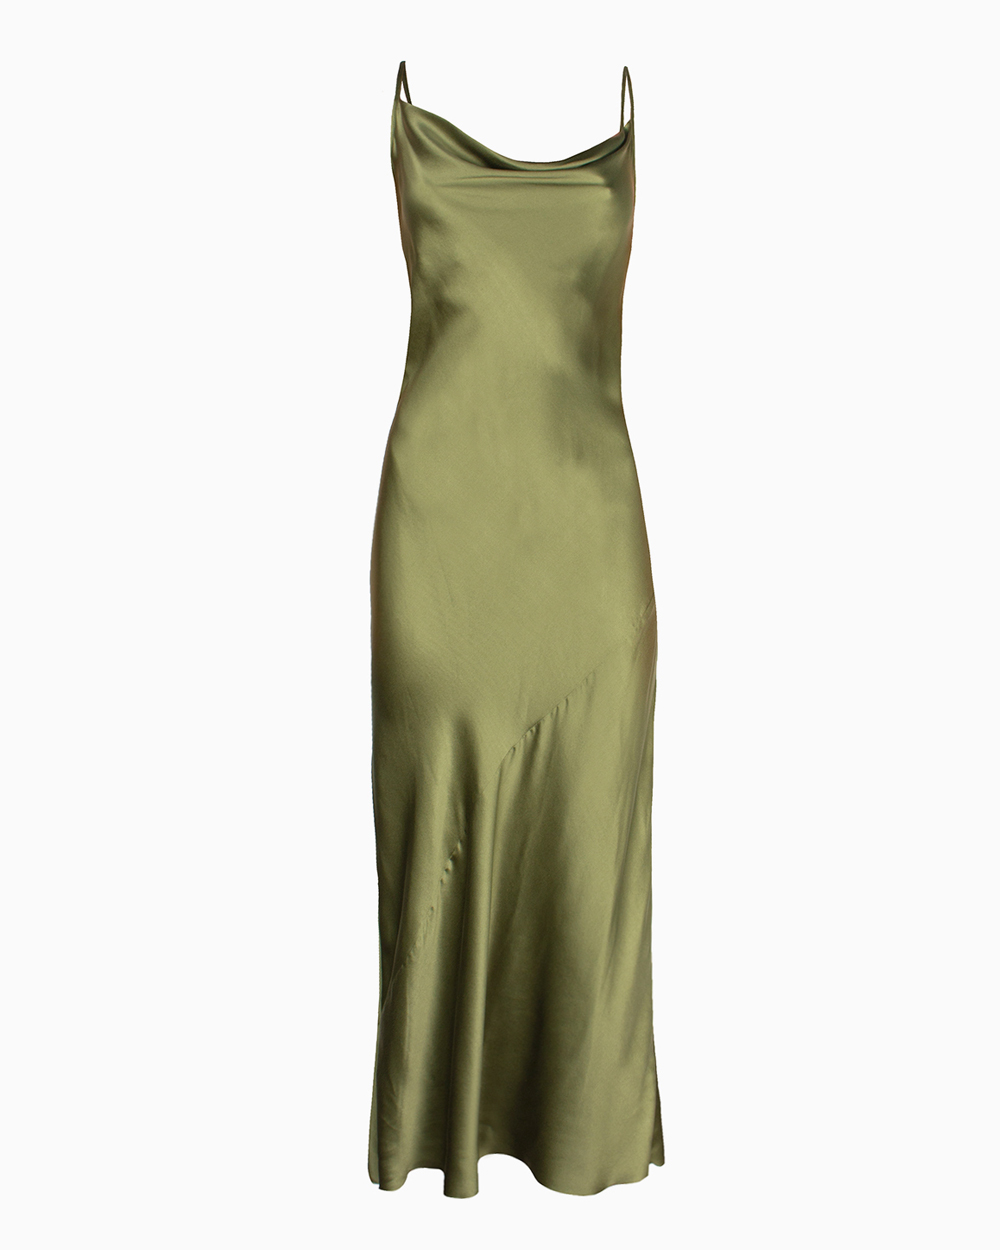 Kaiya slip dress, $440 from Lonely